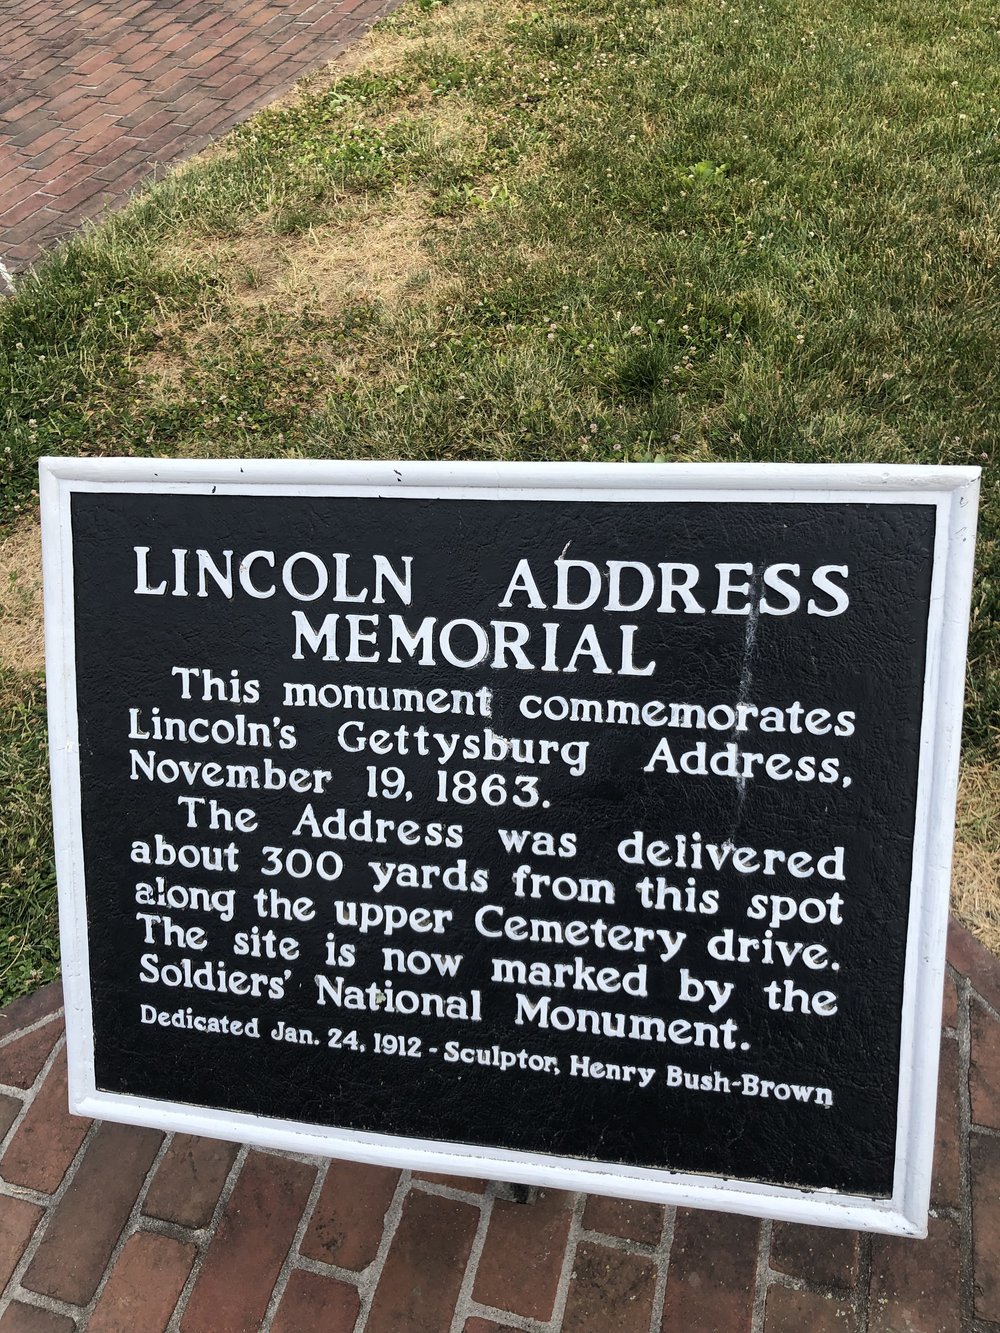 The marker for the Gettysburg Address.